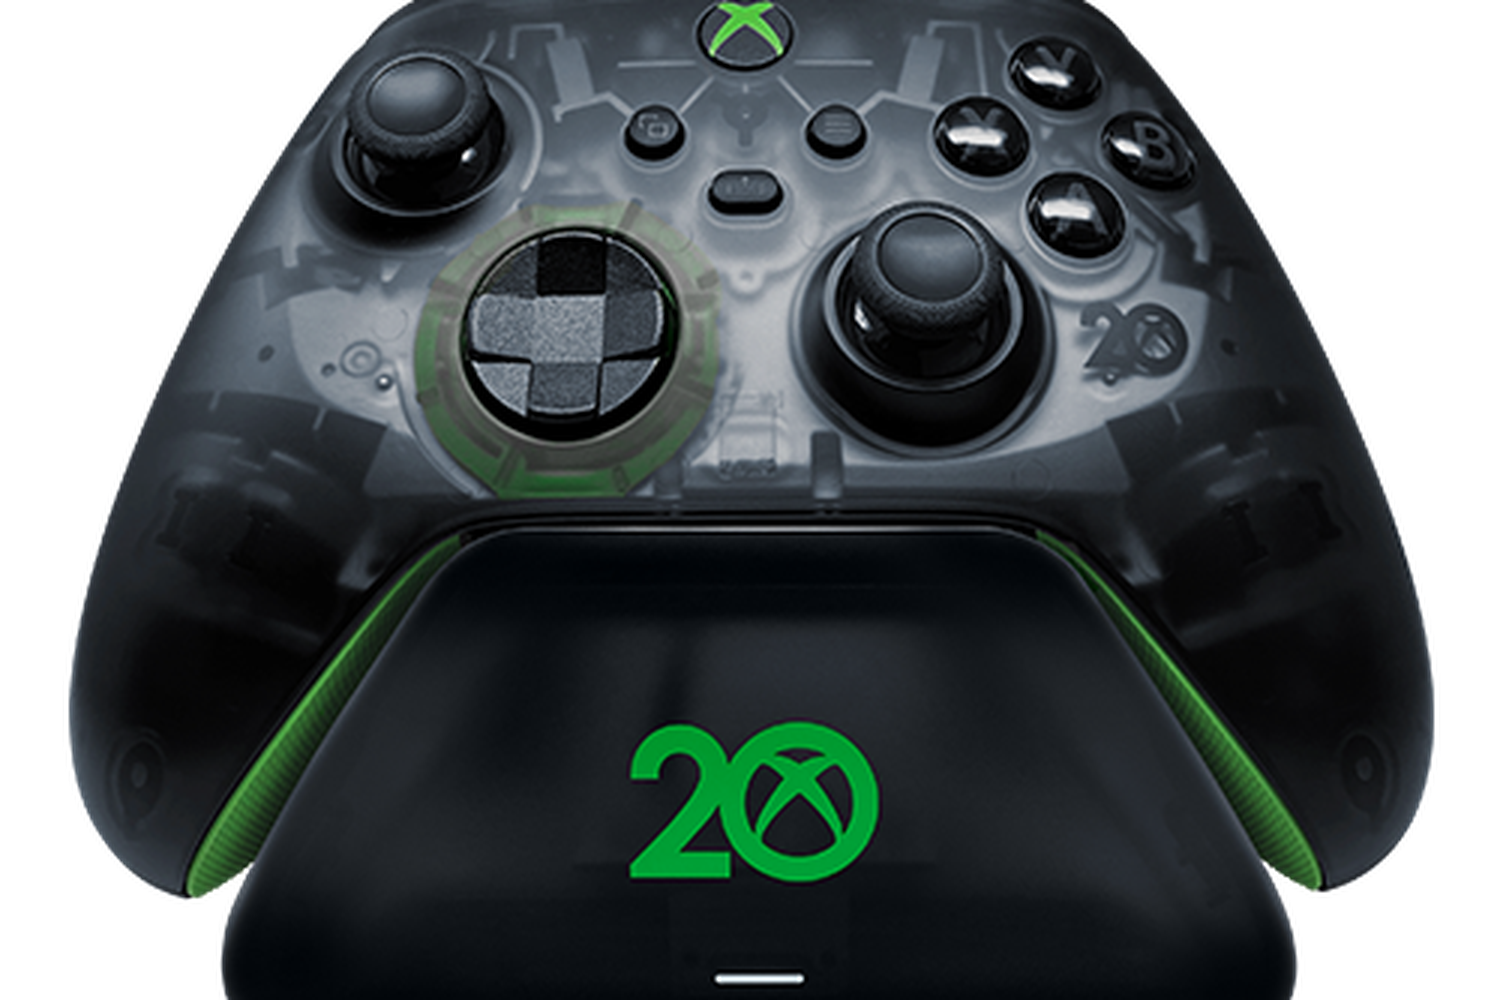 Razer Universal Quick Charging Stand for Xbox review: A familiar premium  accessory